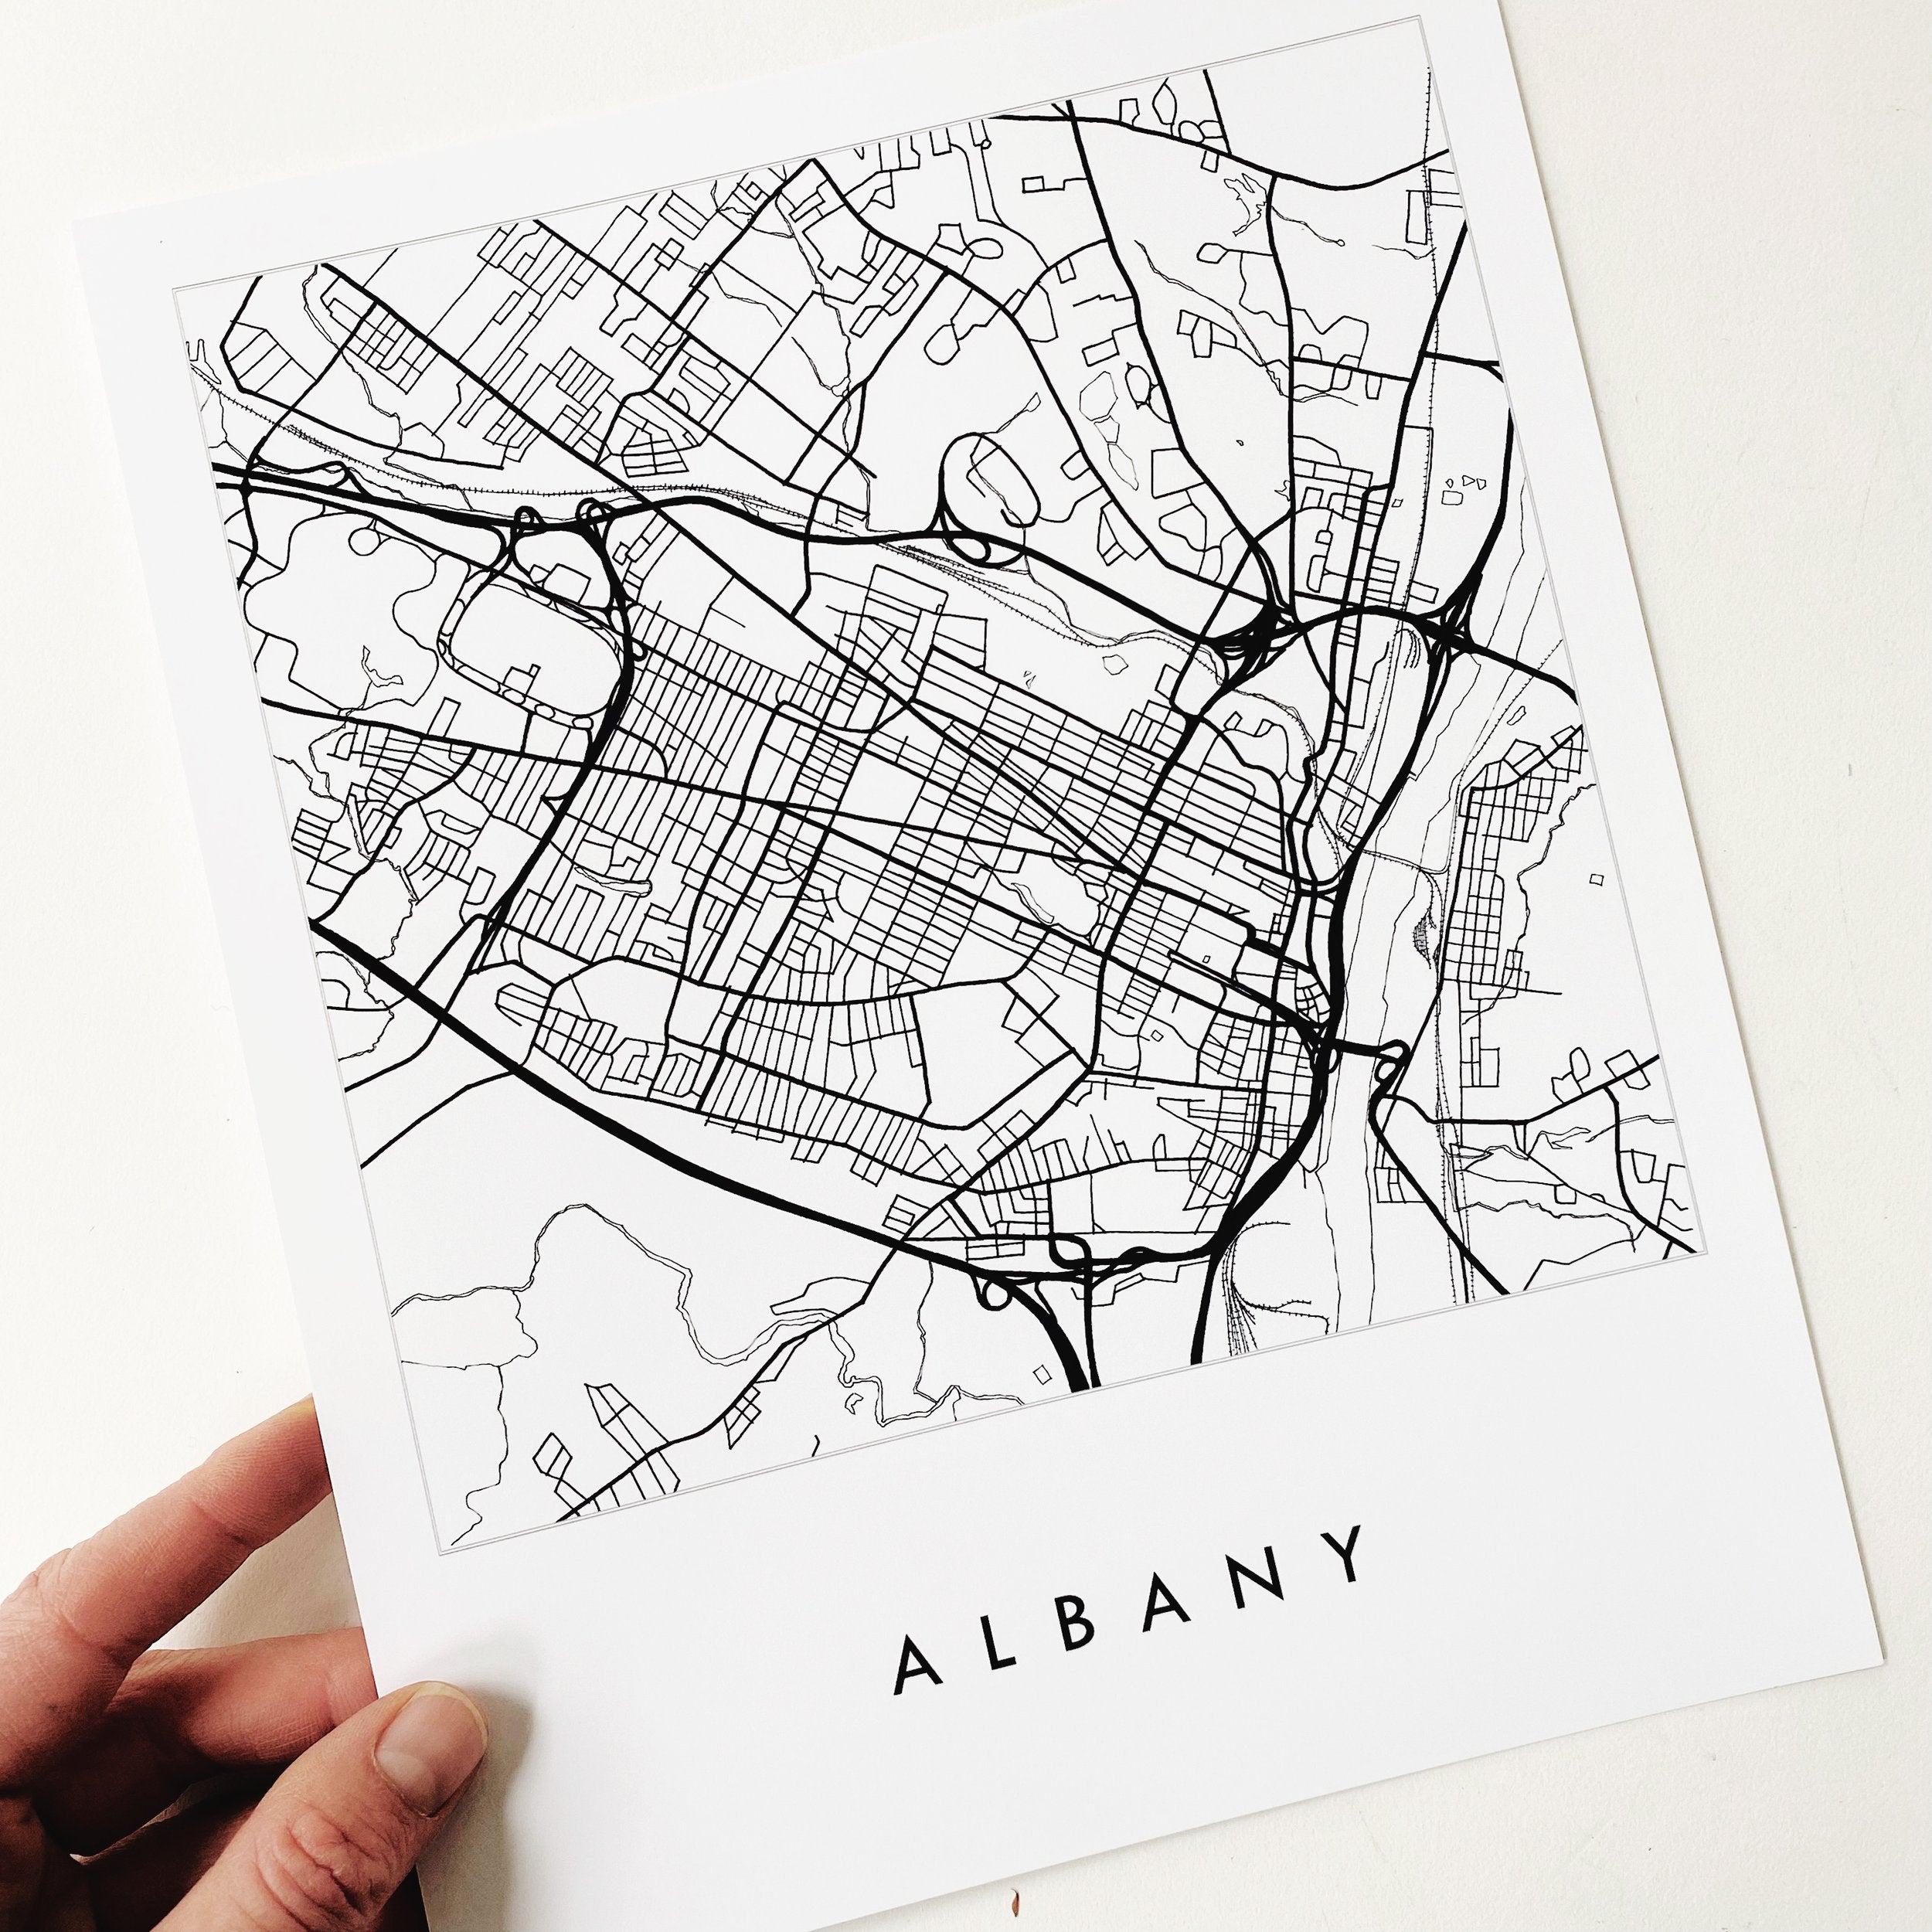 ALBANY New York City Lines Map: PRINT